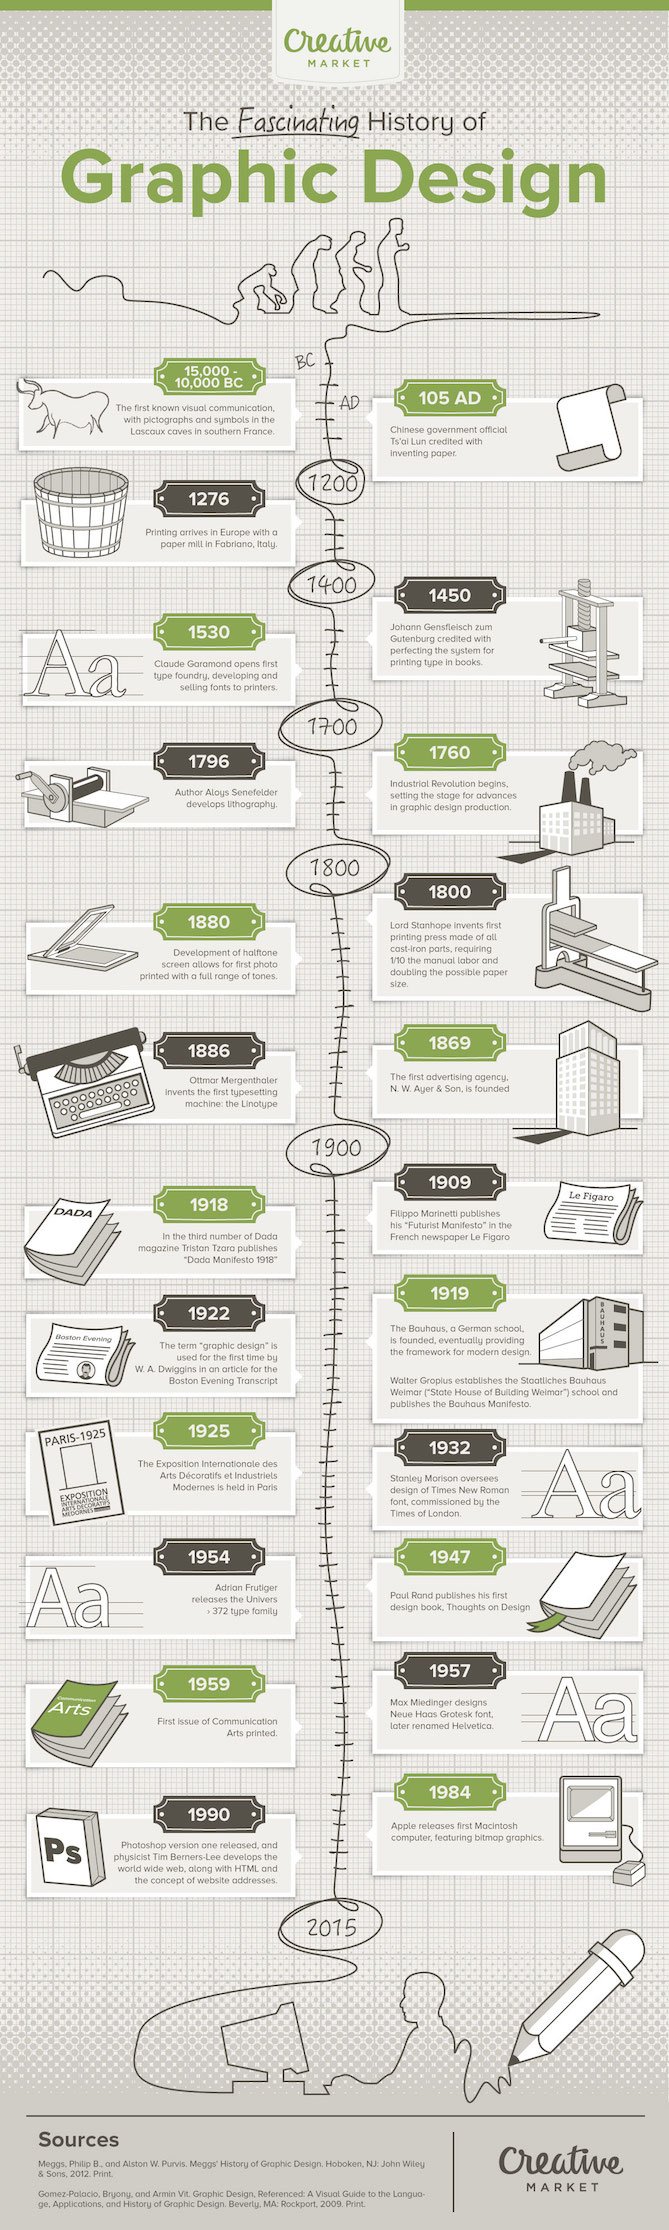 history-graphic-design-infographic